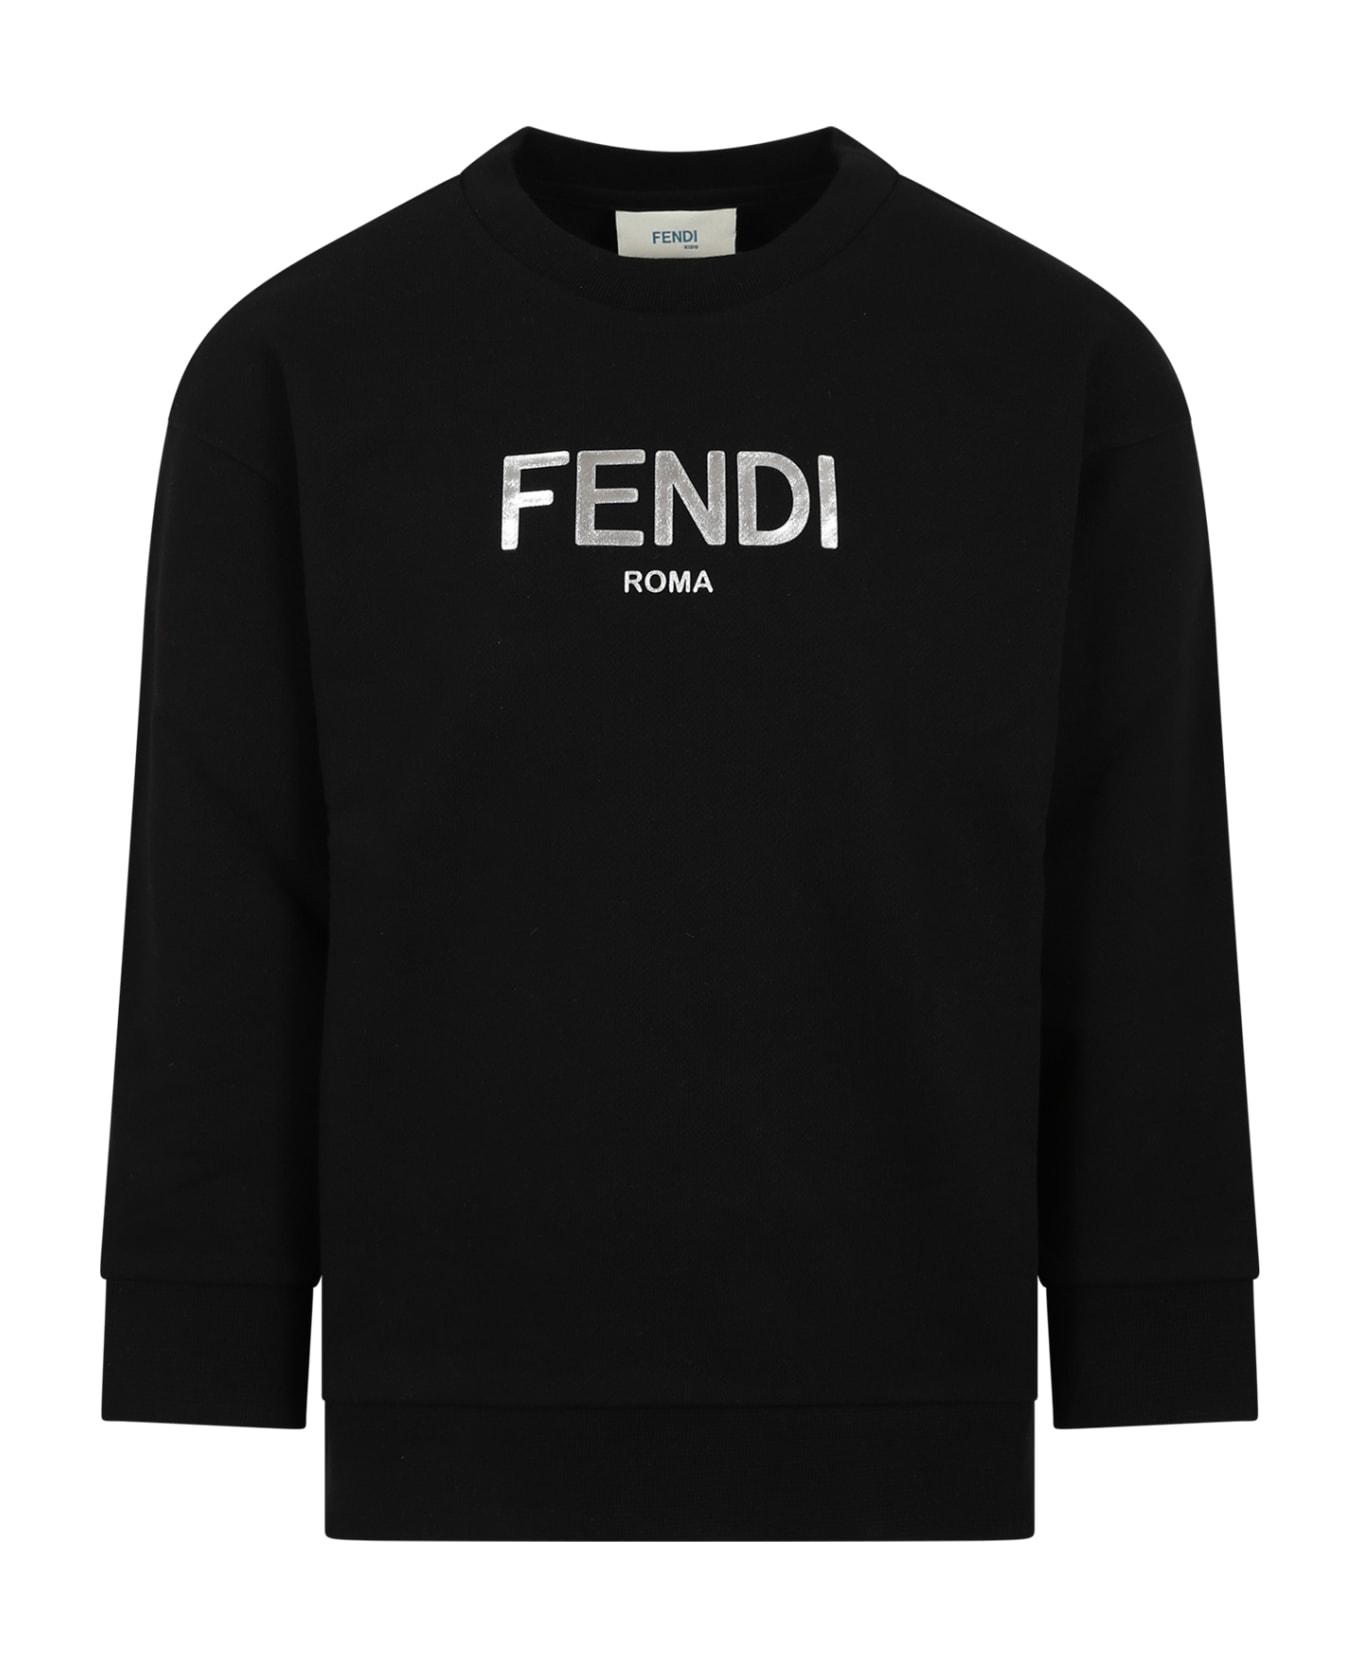 Fendi Black Sweatshirt For Kids With Logo - Black